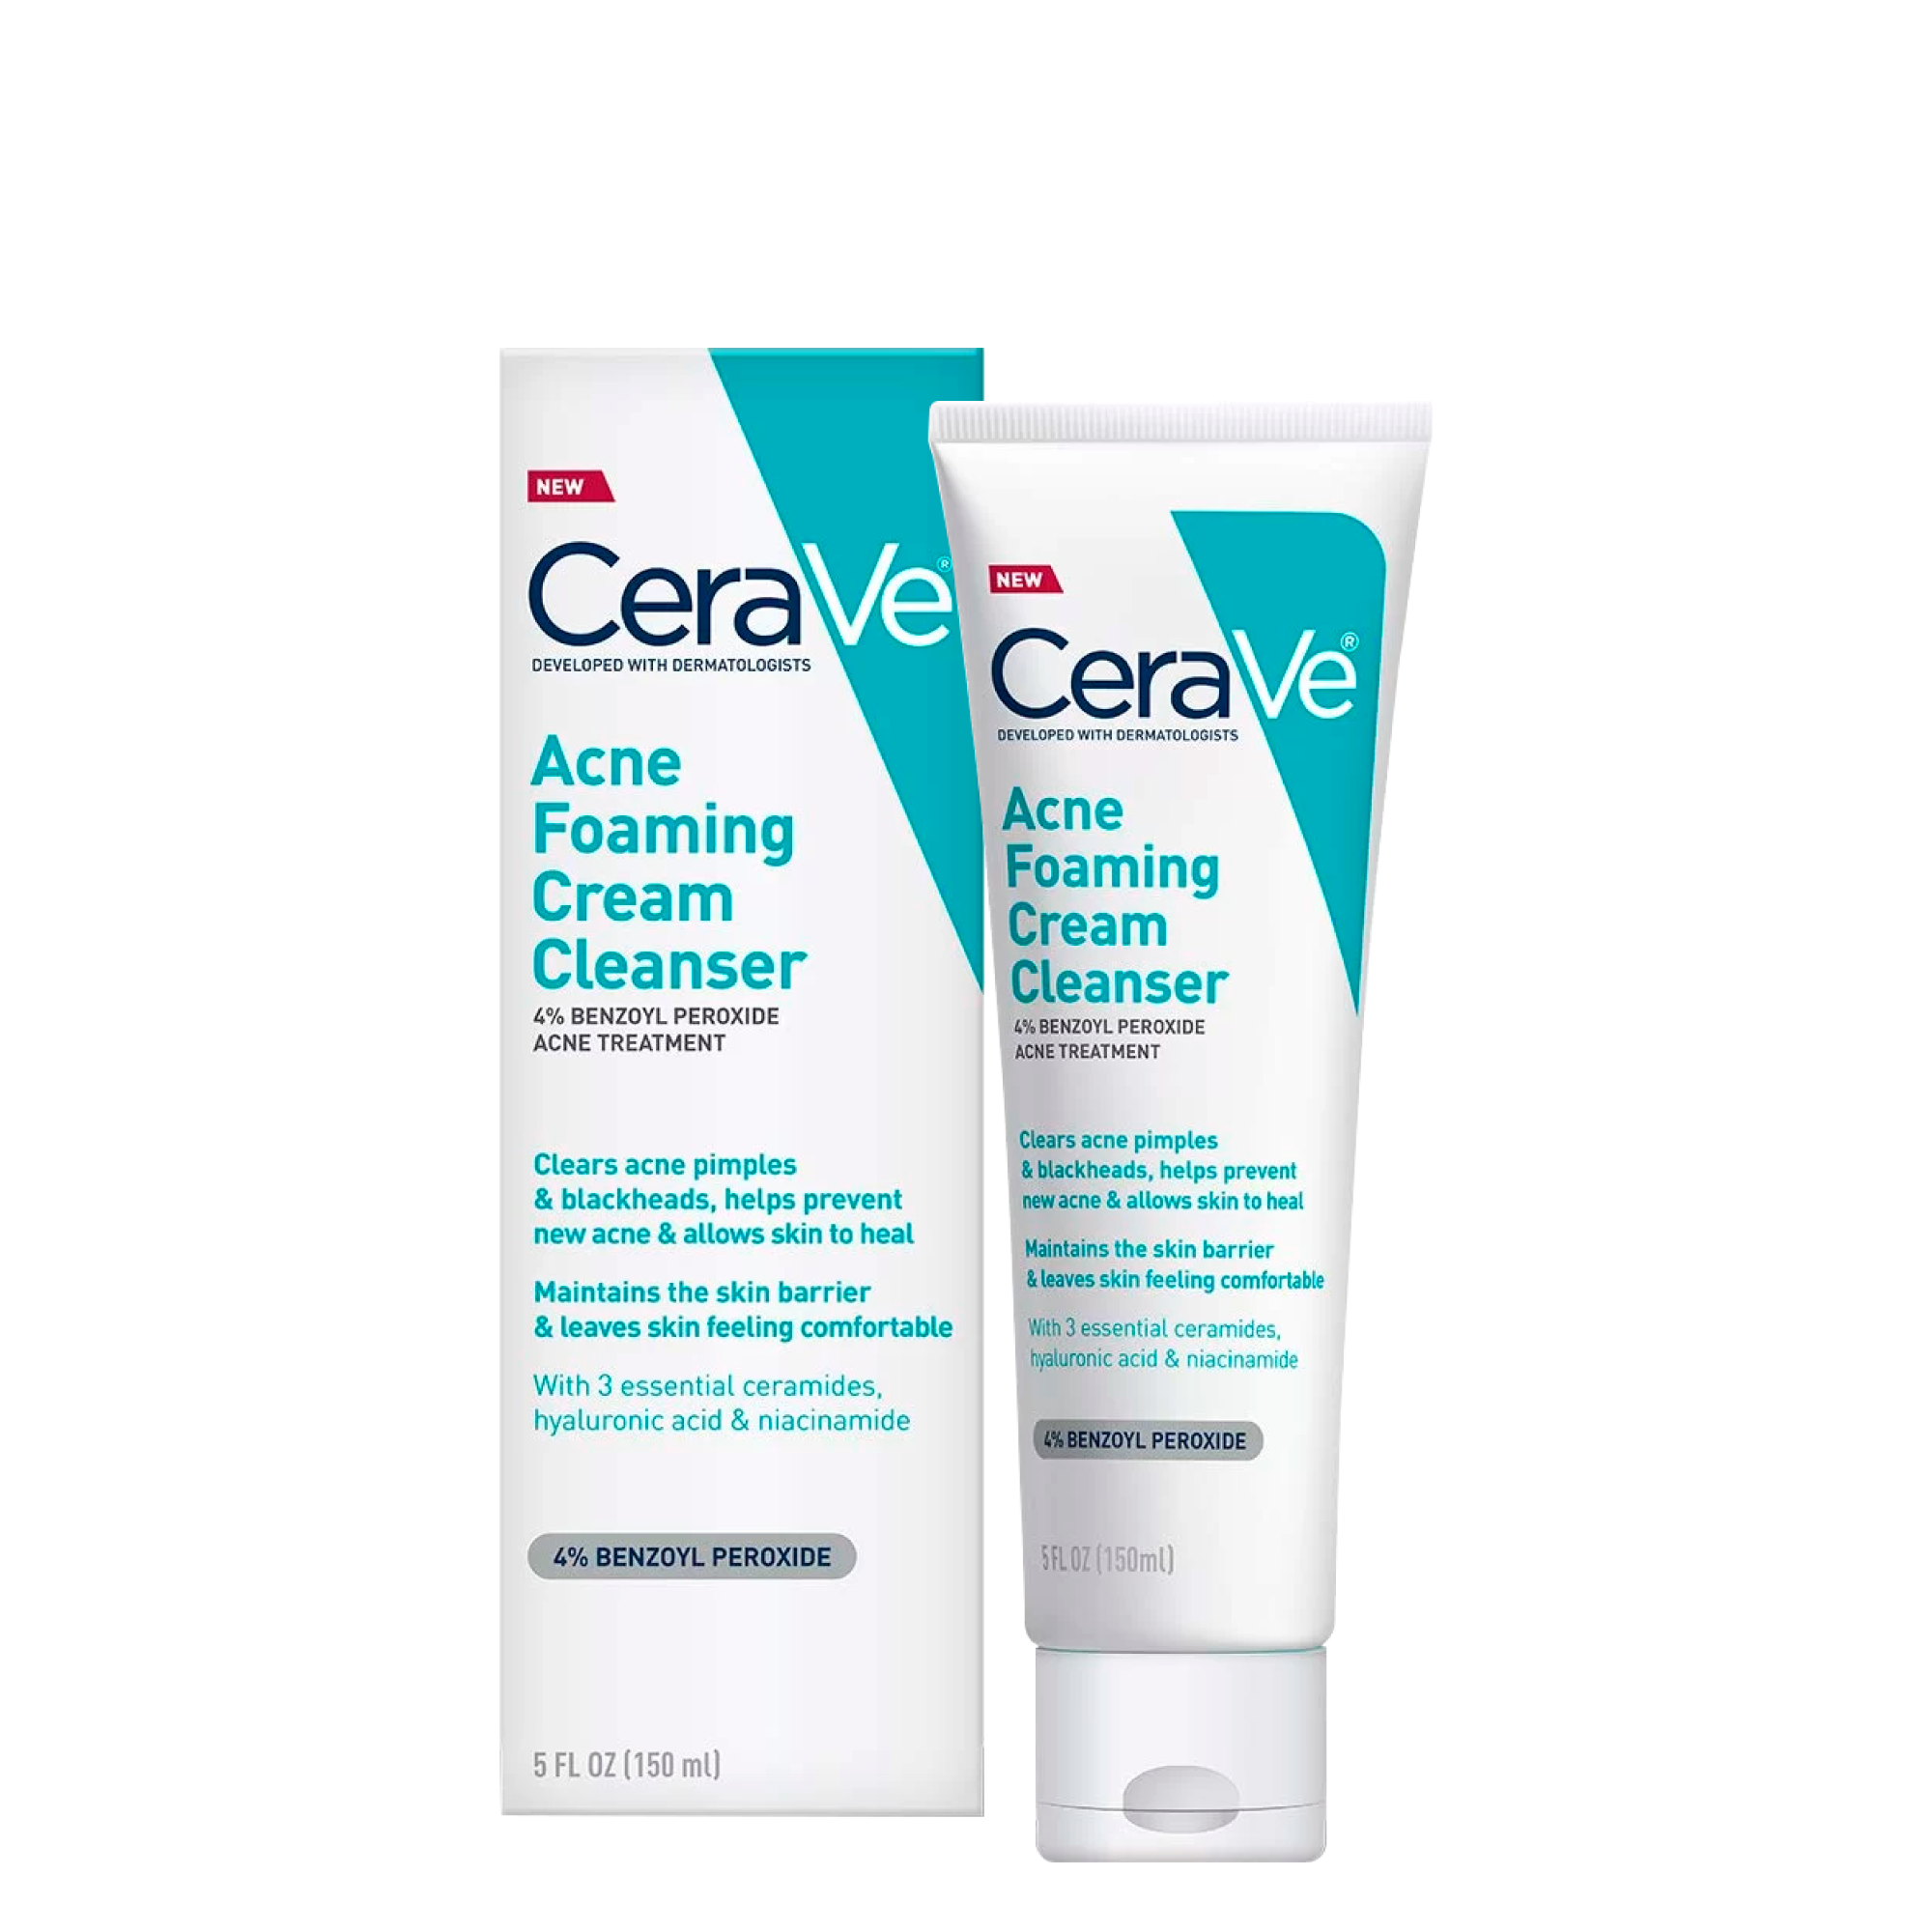 Cerave Acne Foaming Cream Cleanser 150ml. Cerave